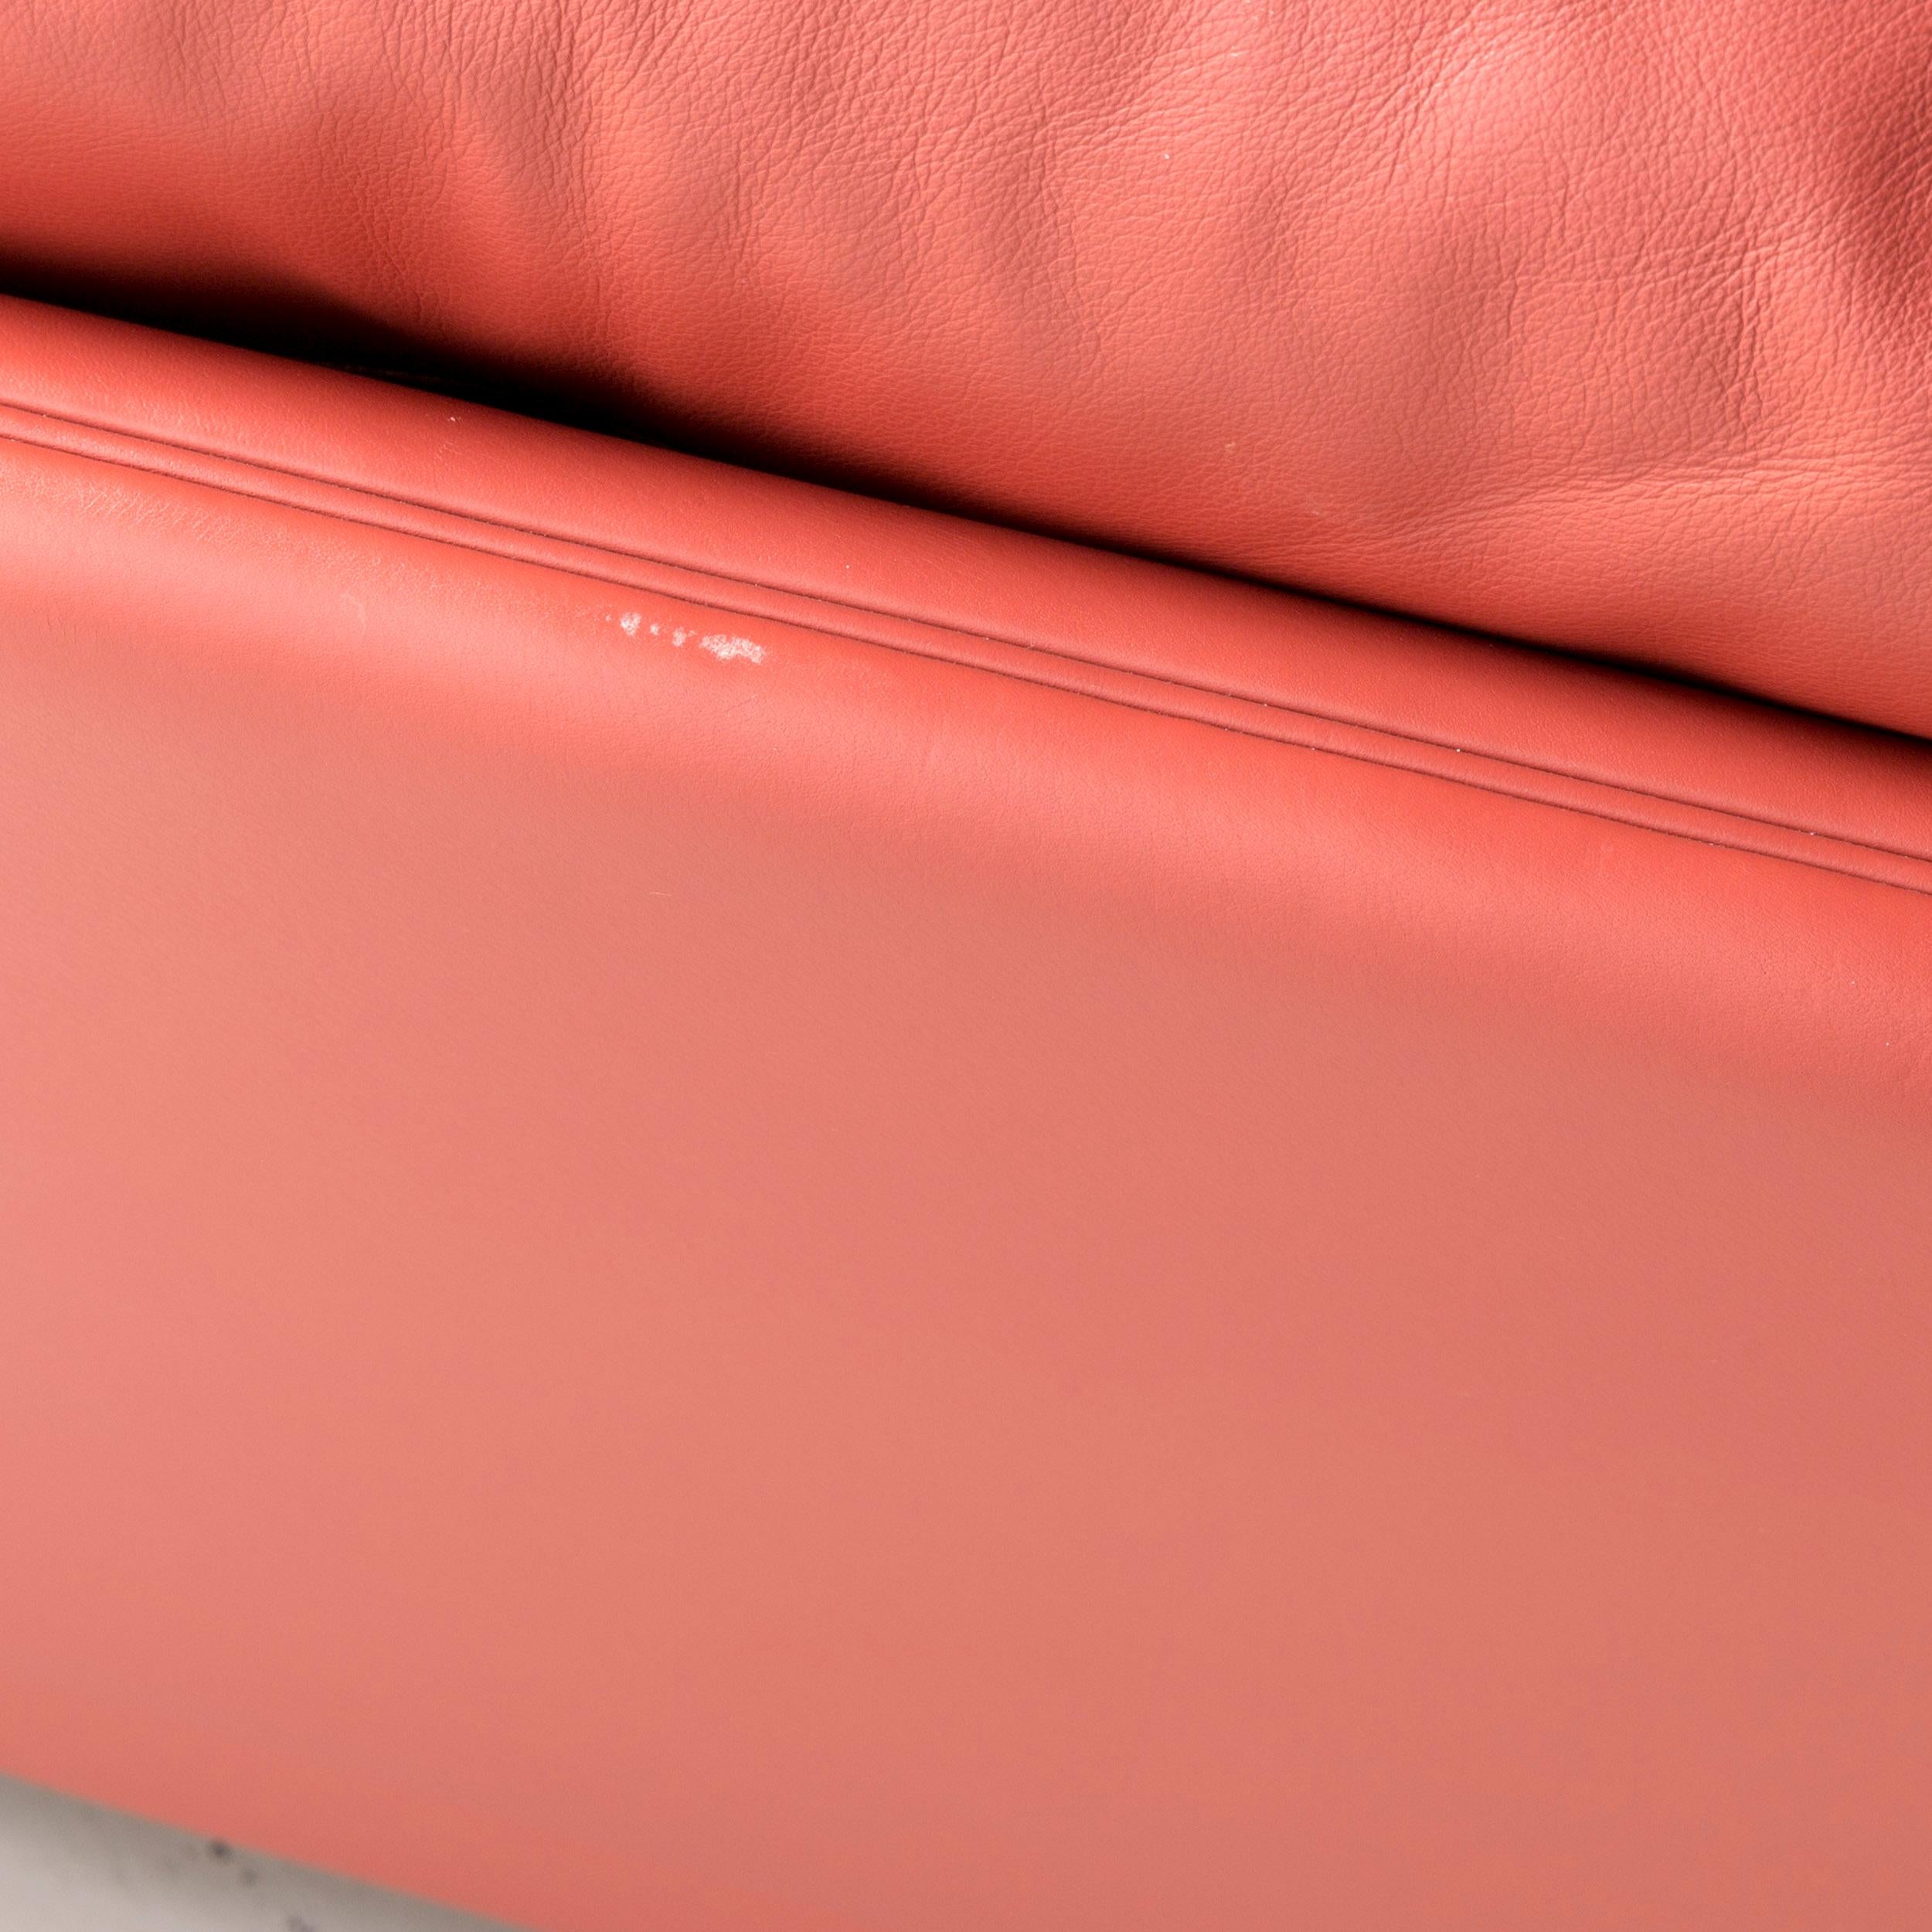 Poltrona Frau Dream on Designer Leather Two-Seat Couch Orange 3